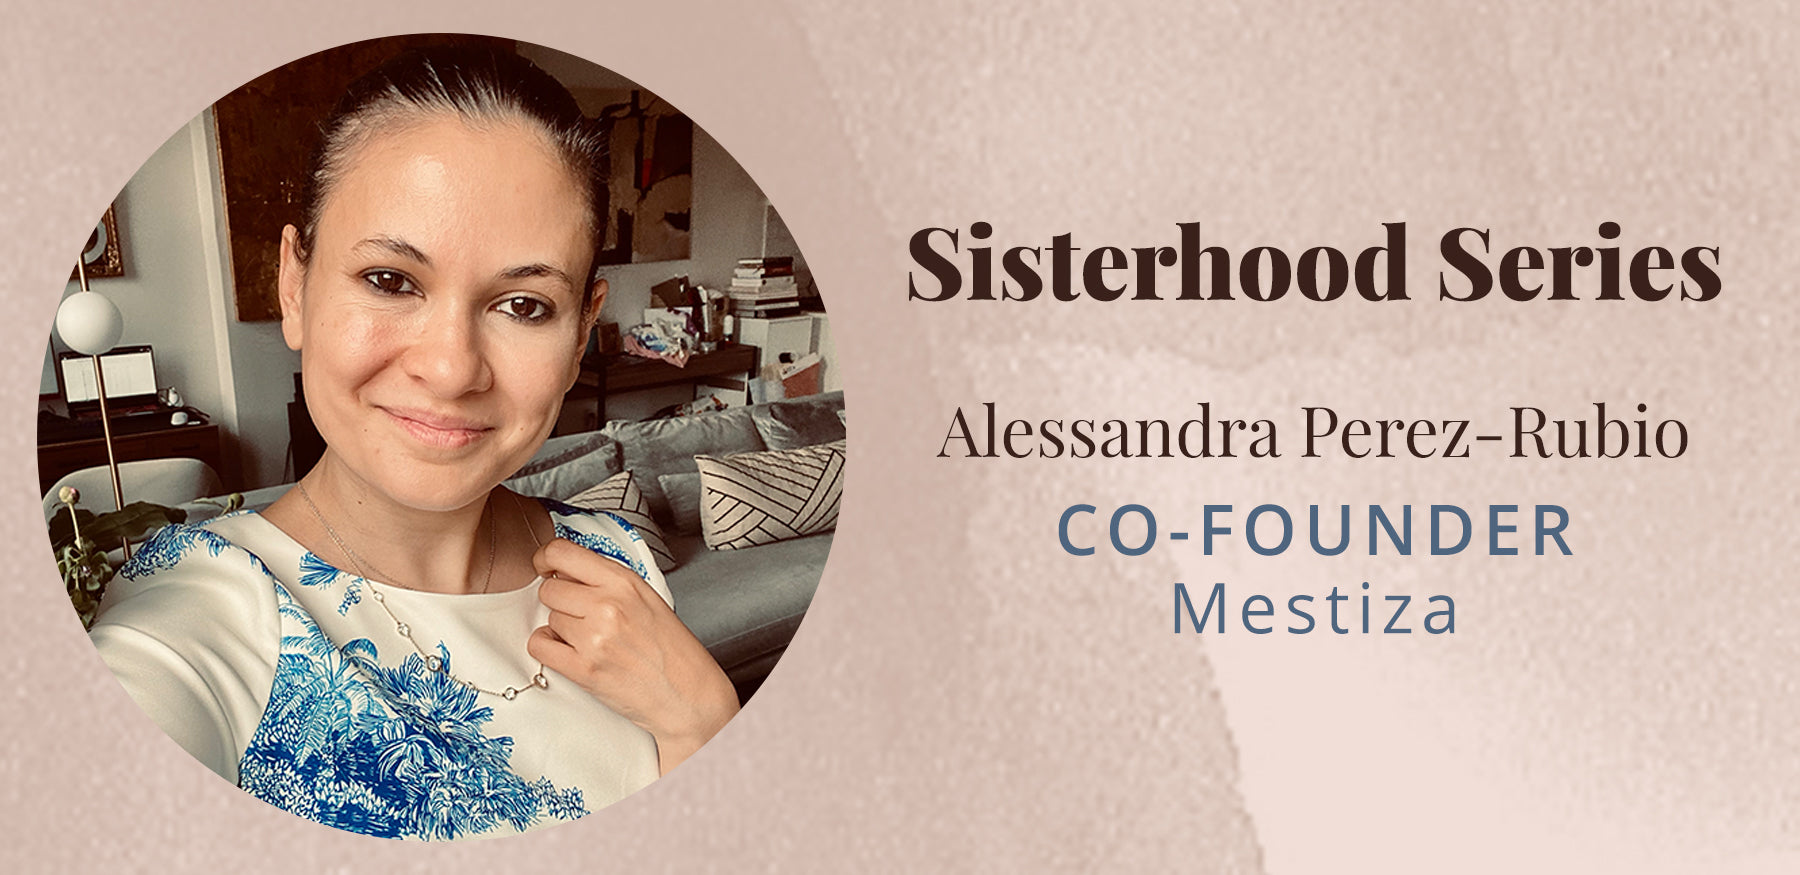 <!--The Sisterhood Series with Alessandra Perez-Rubio-->